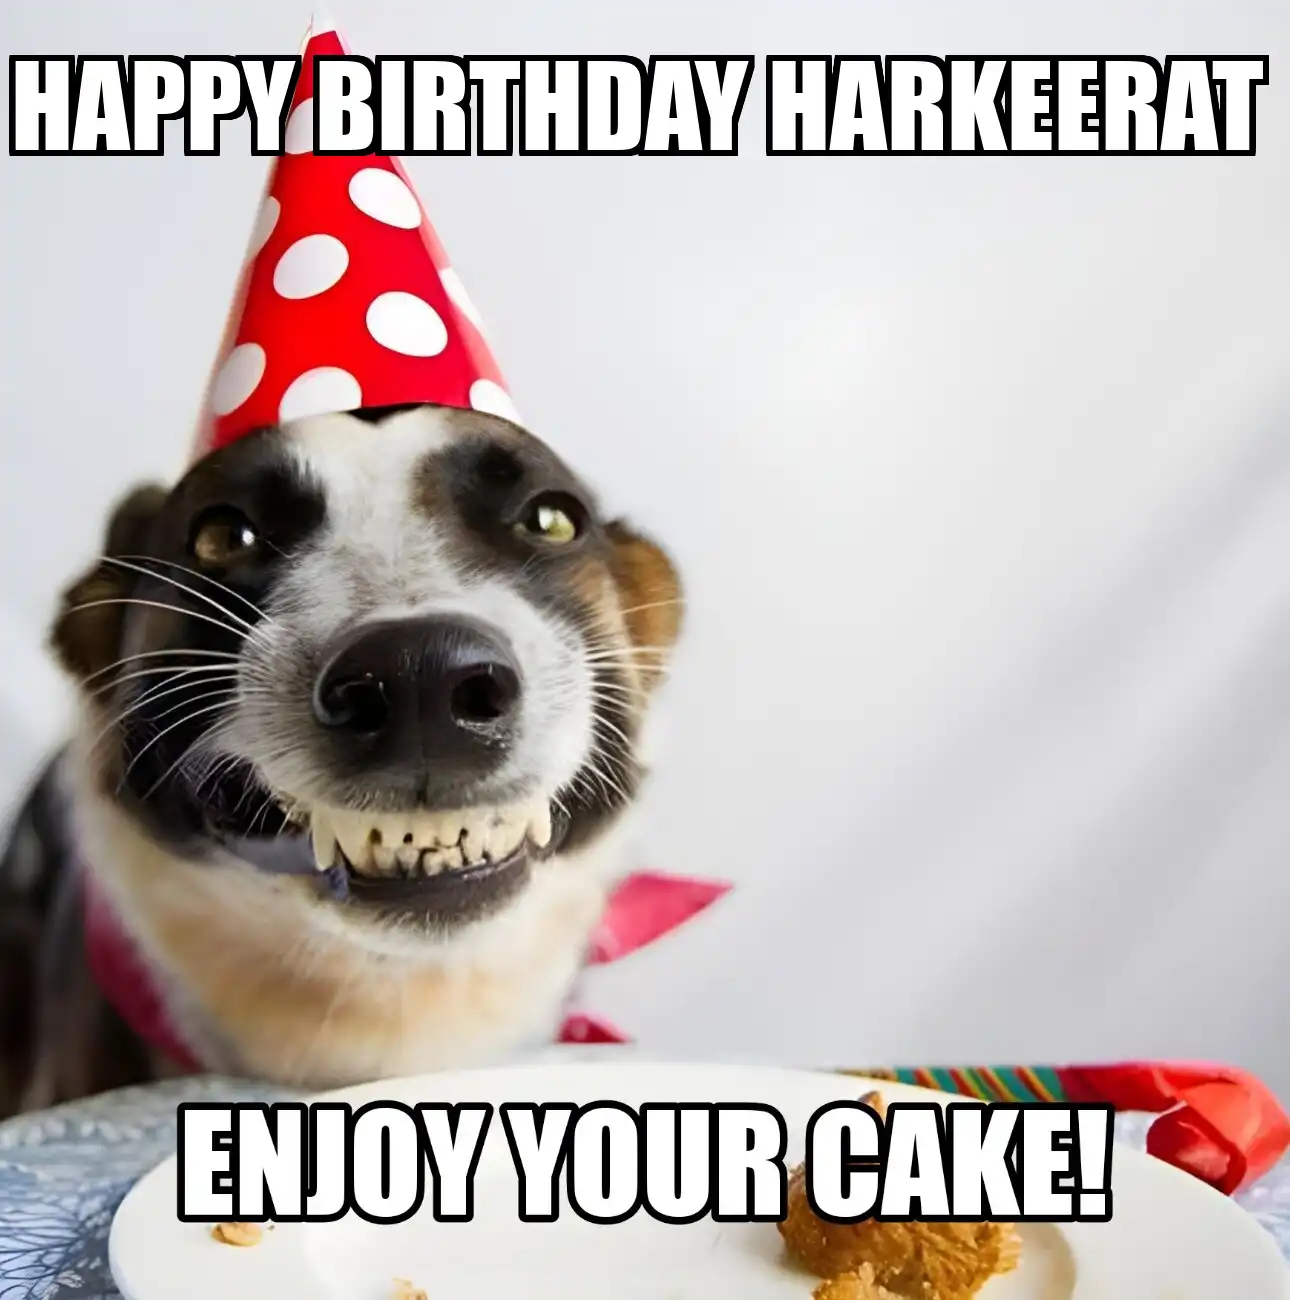 Happy Birthday Harkeerat Enjoy Your Cake Dog Meme